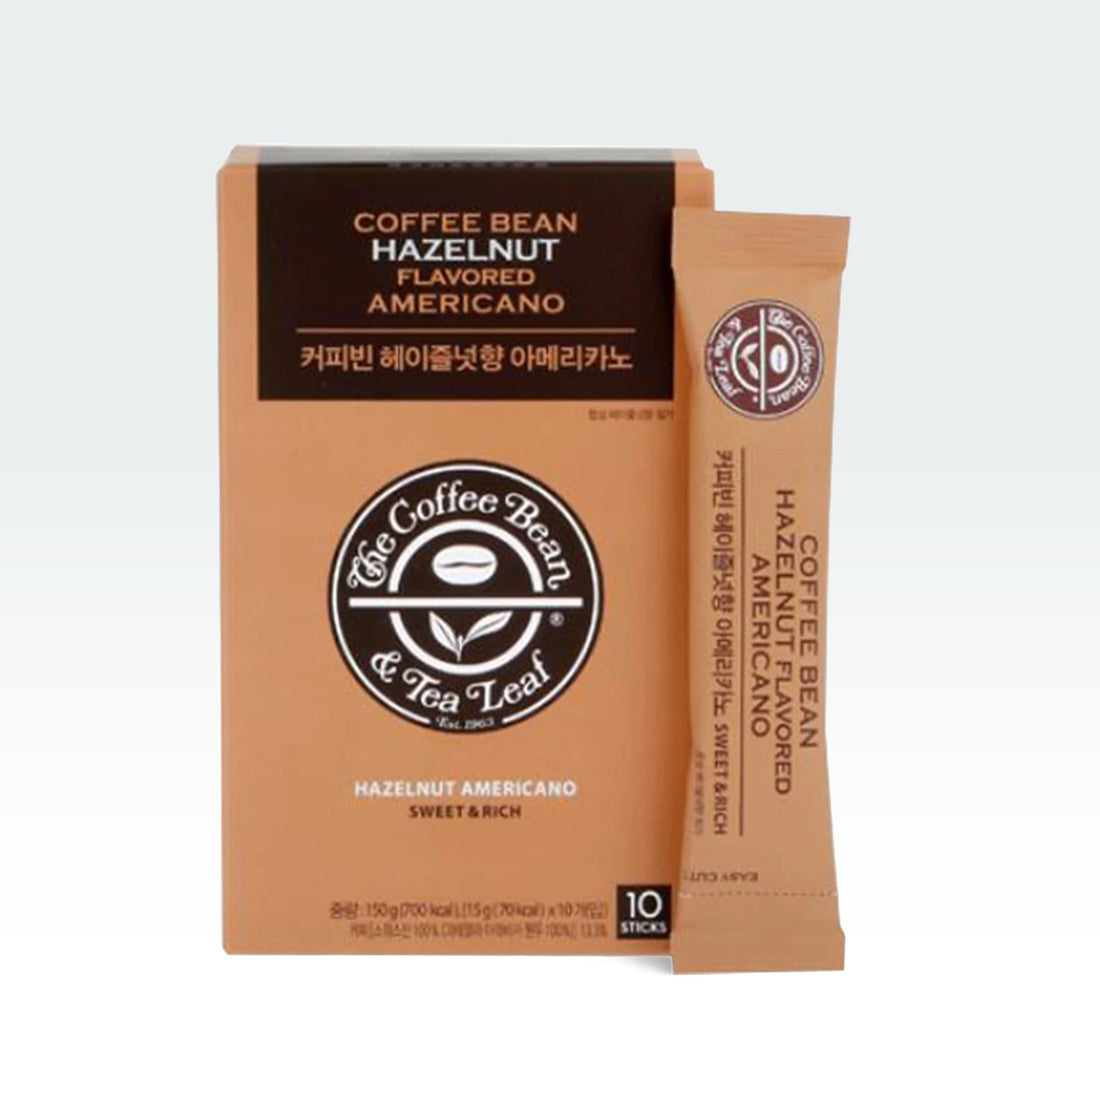 Coffee Bean Hazelnut Flavored Americano 0.52oz(1.5g) 10 Sticks - Anytime Basket